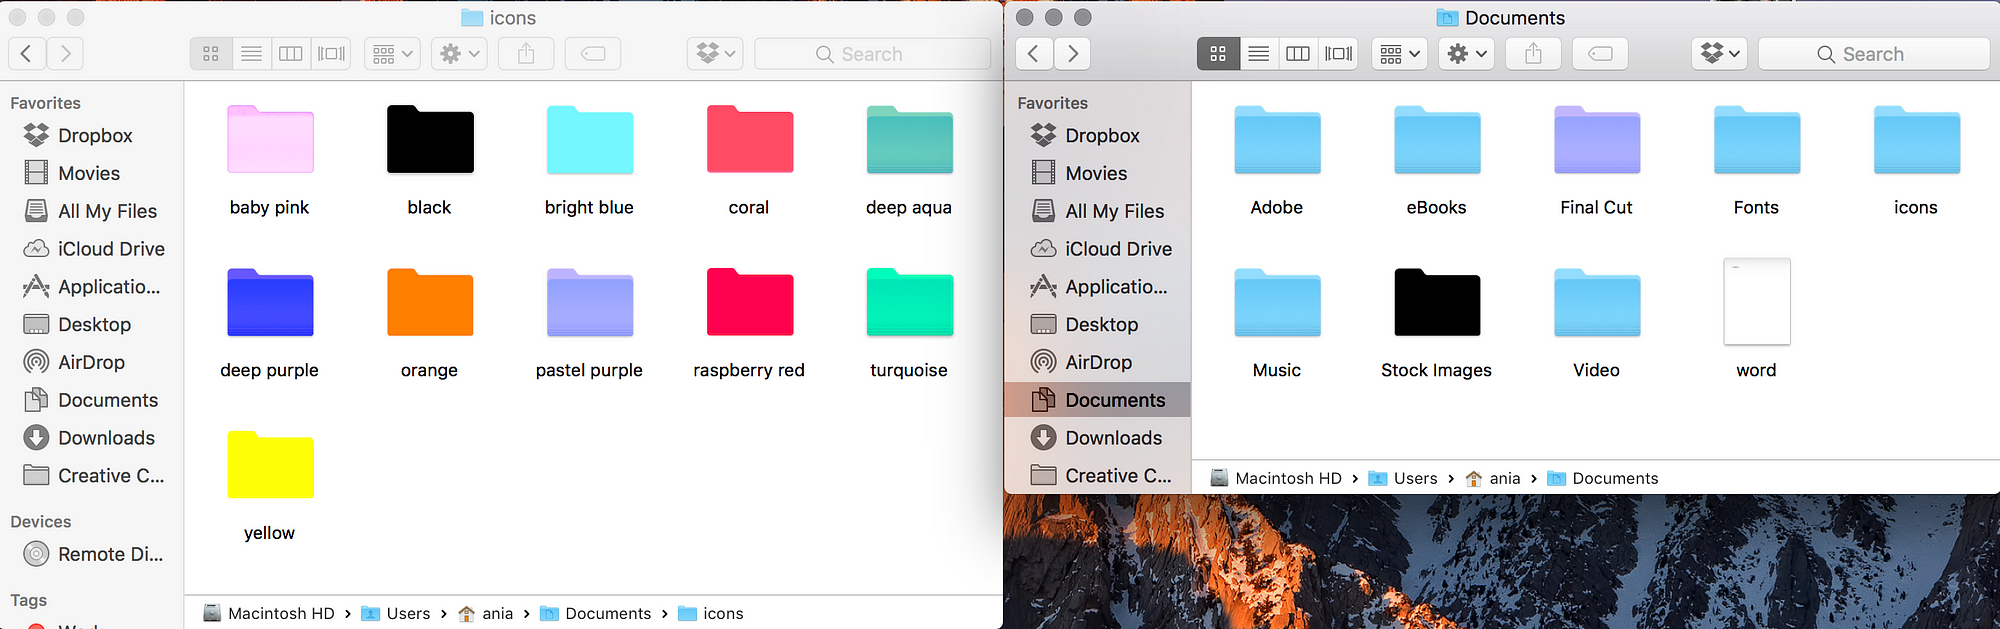 How To Change Folder Color On MacOS Sierra | by Ania Klaudia Kats | Medium